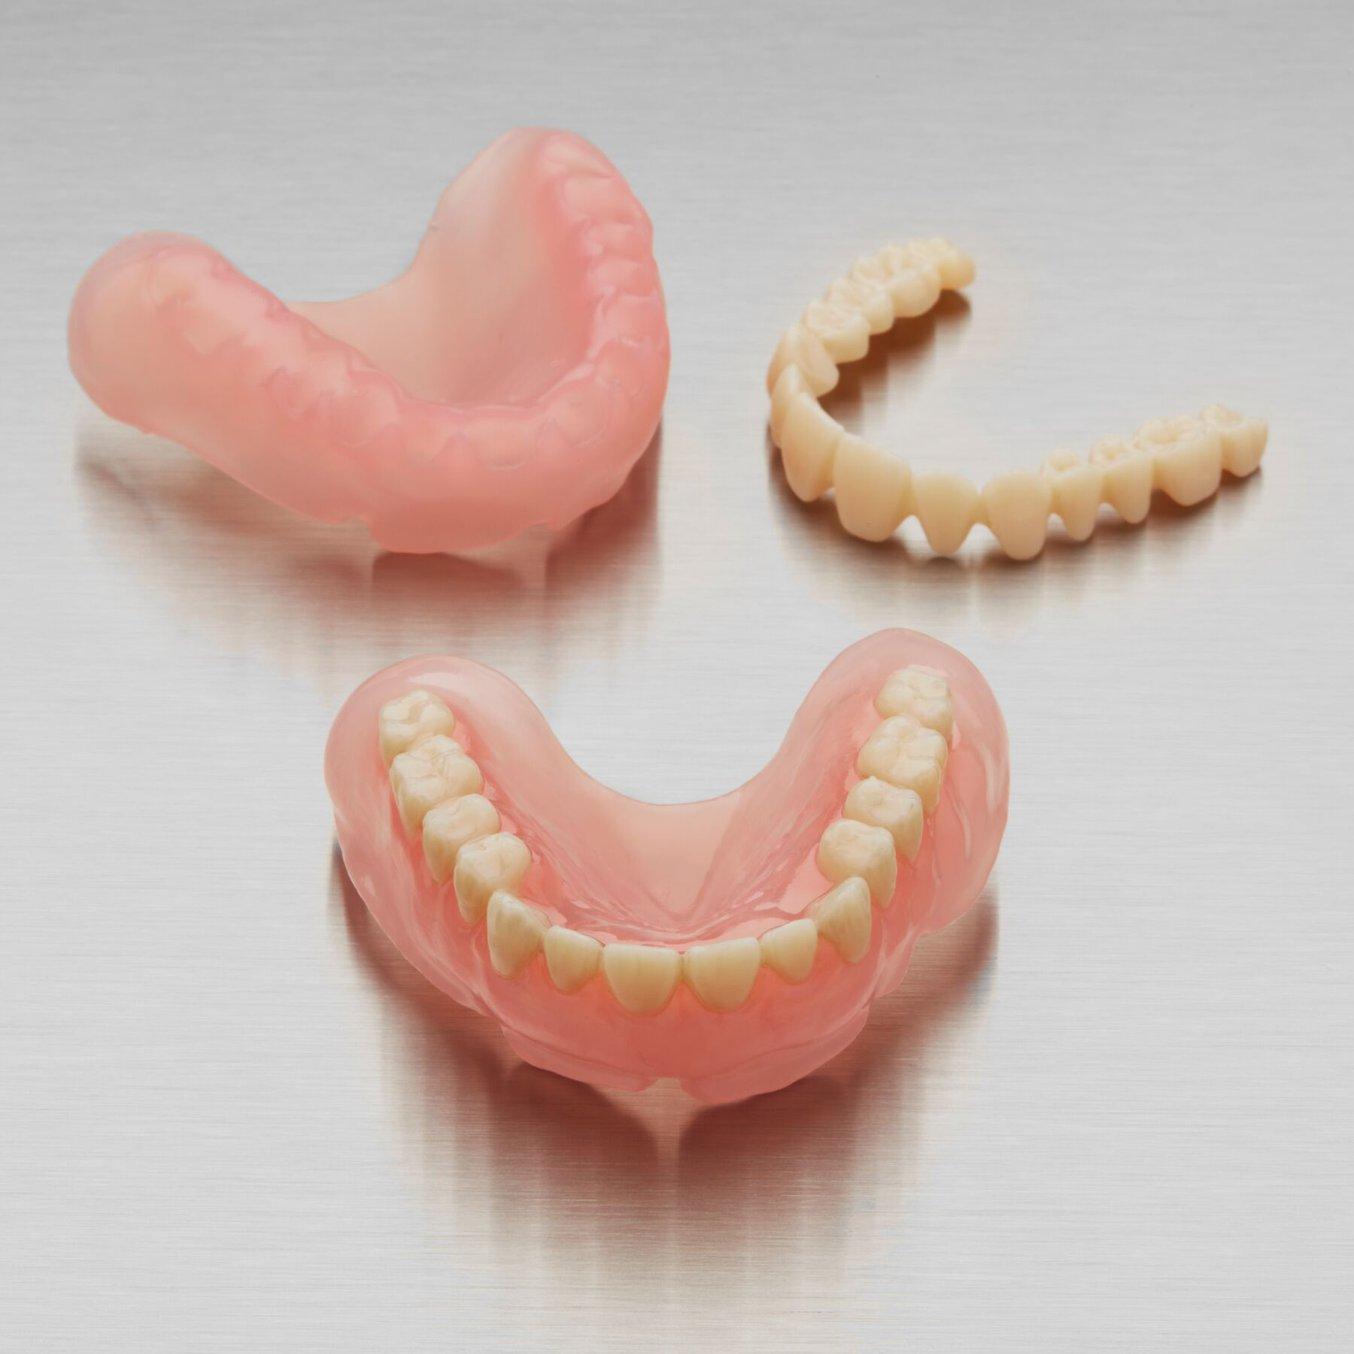 Webinar Digital Dentures 3D Printing